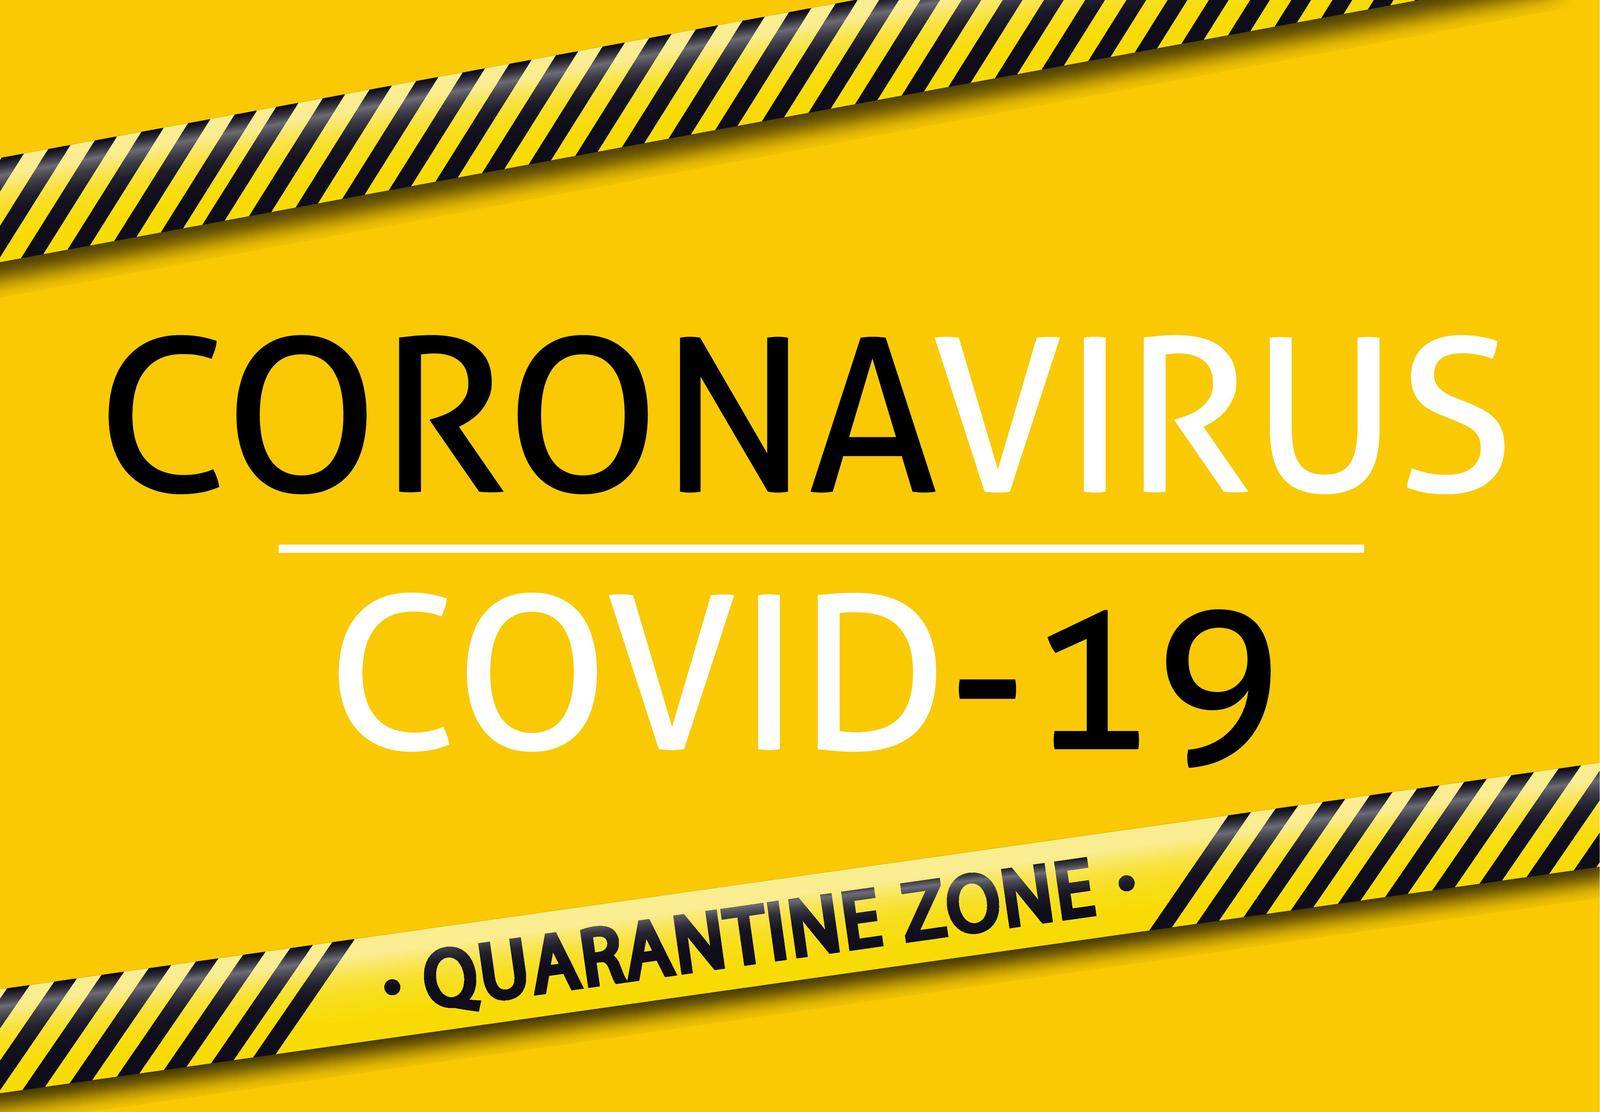 Quarantine Zone.Covid-19. Coronavirus. by ku4erashka